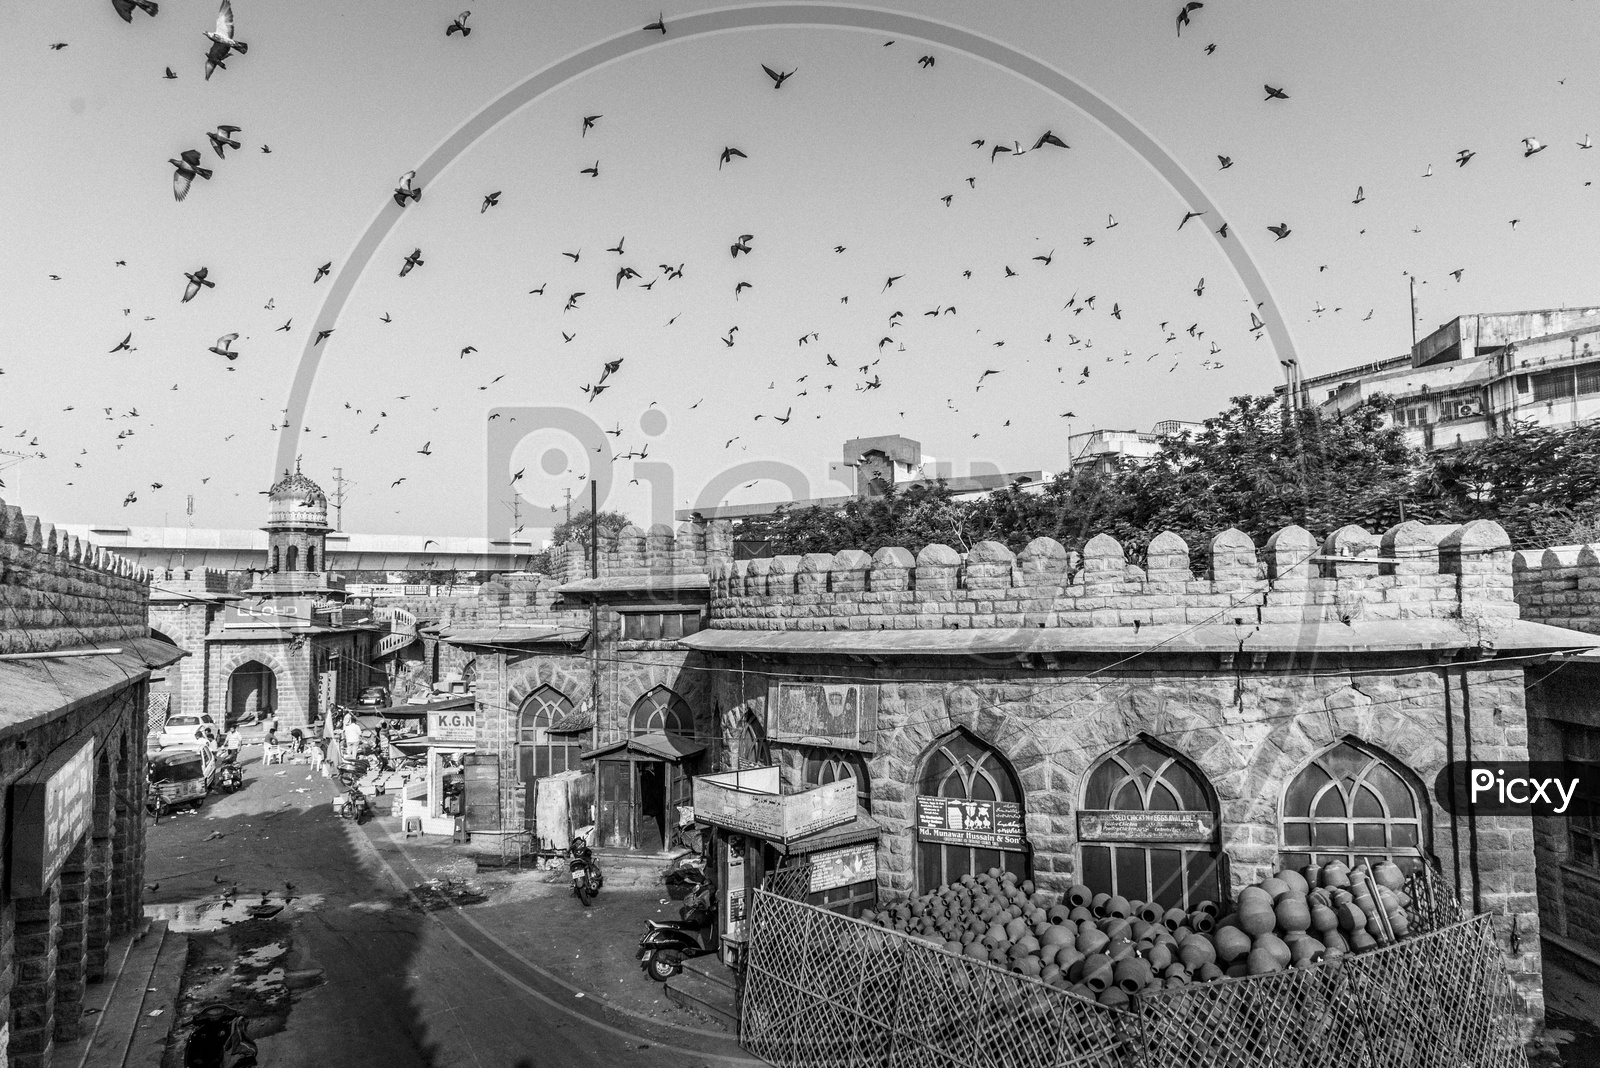 Birds flying at Mozamjahi Market